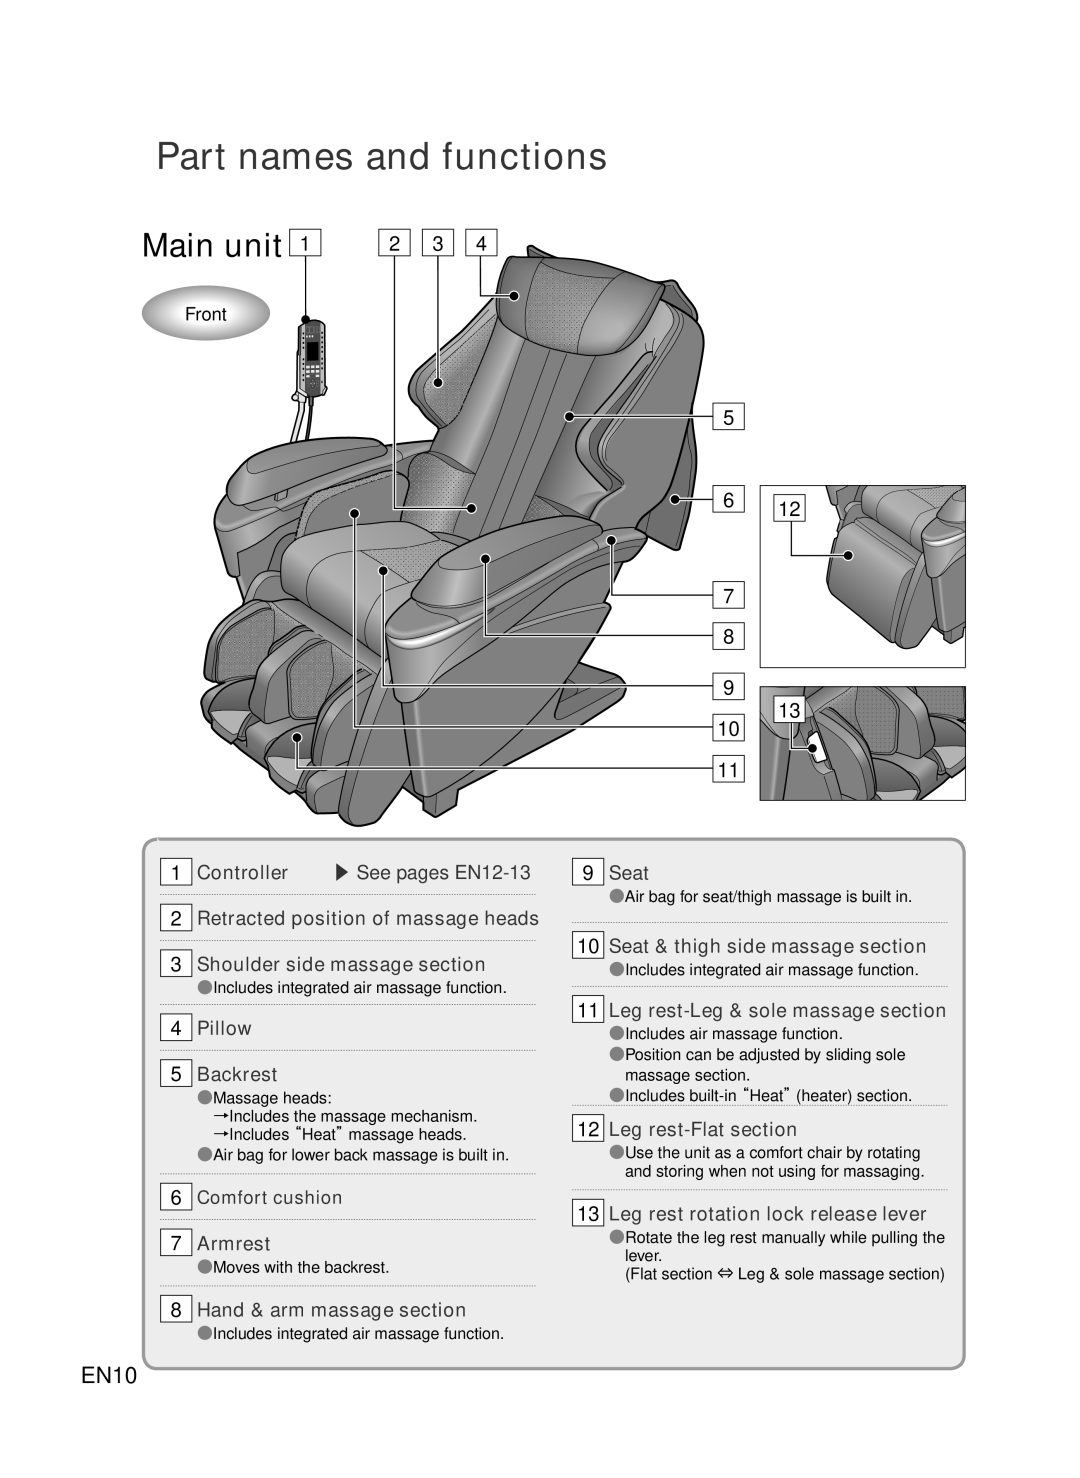 Panasonic EP-MA73 manual Part names and functions, Main unit, EN10 